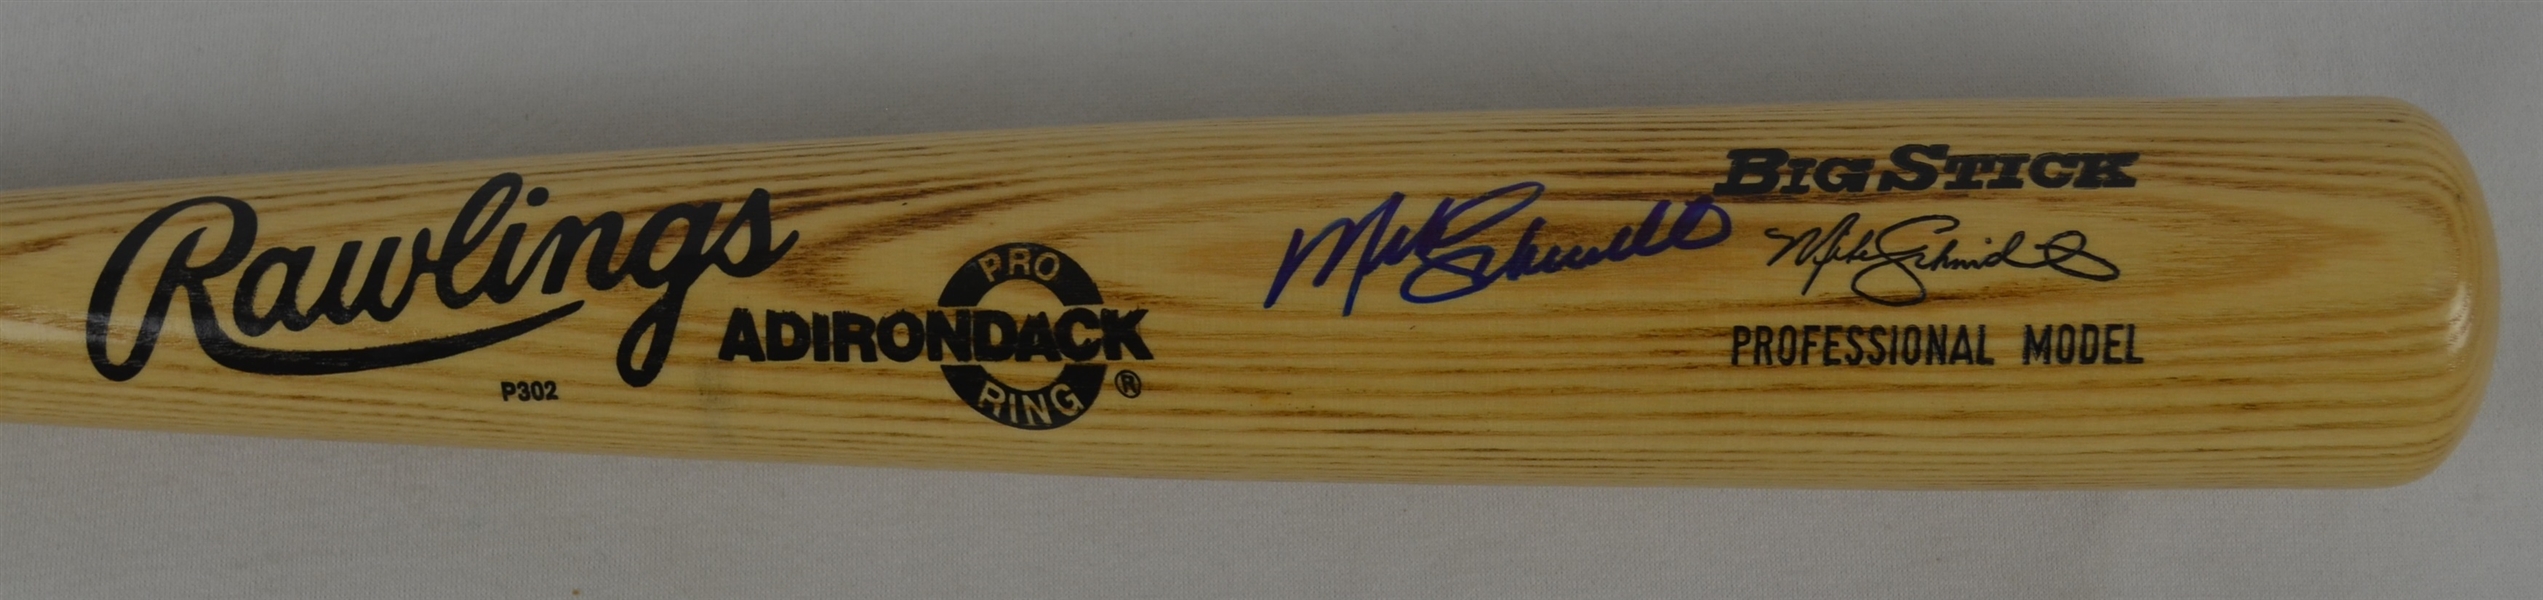 Mike Schmidt Autographed Rawlings Signature Model Bat